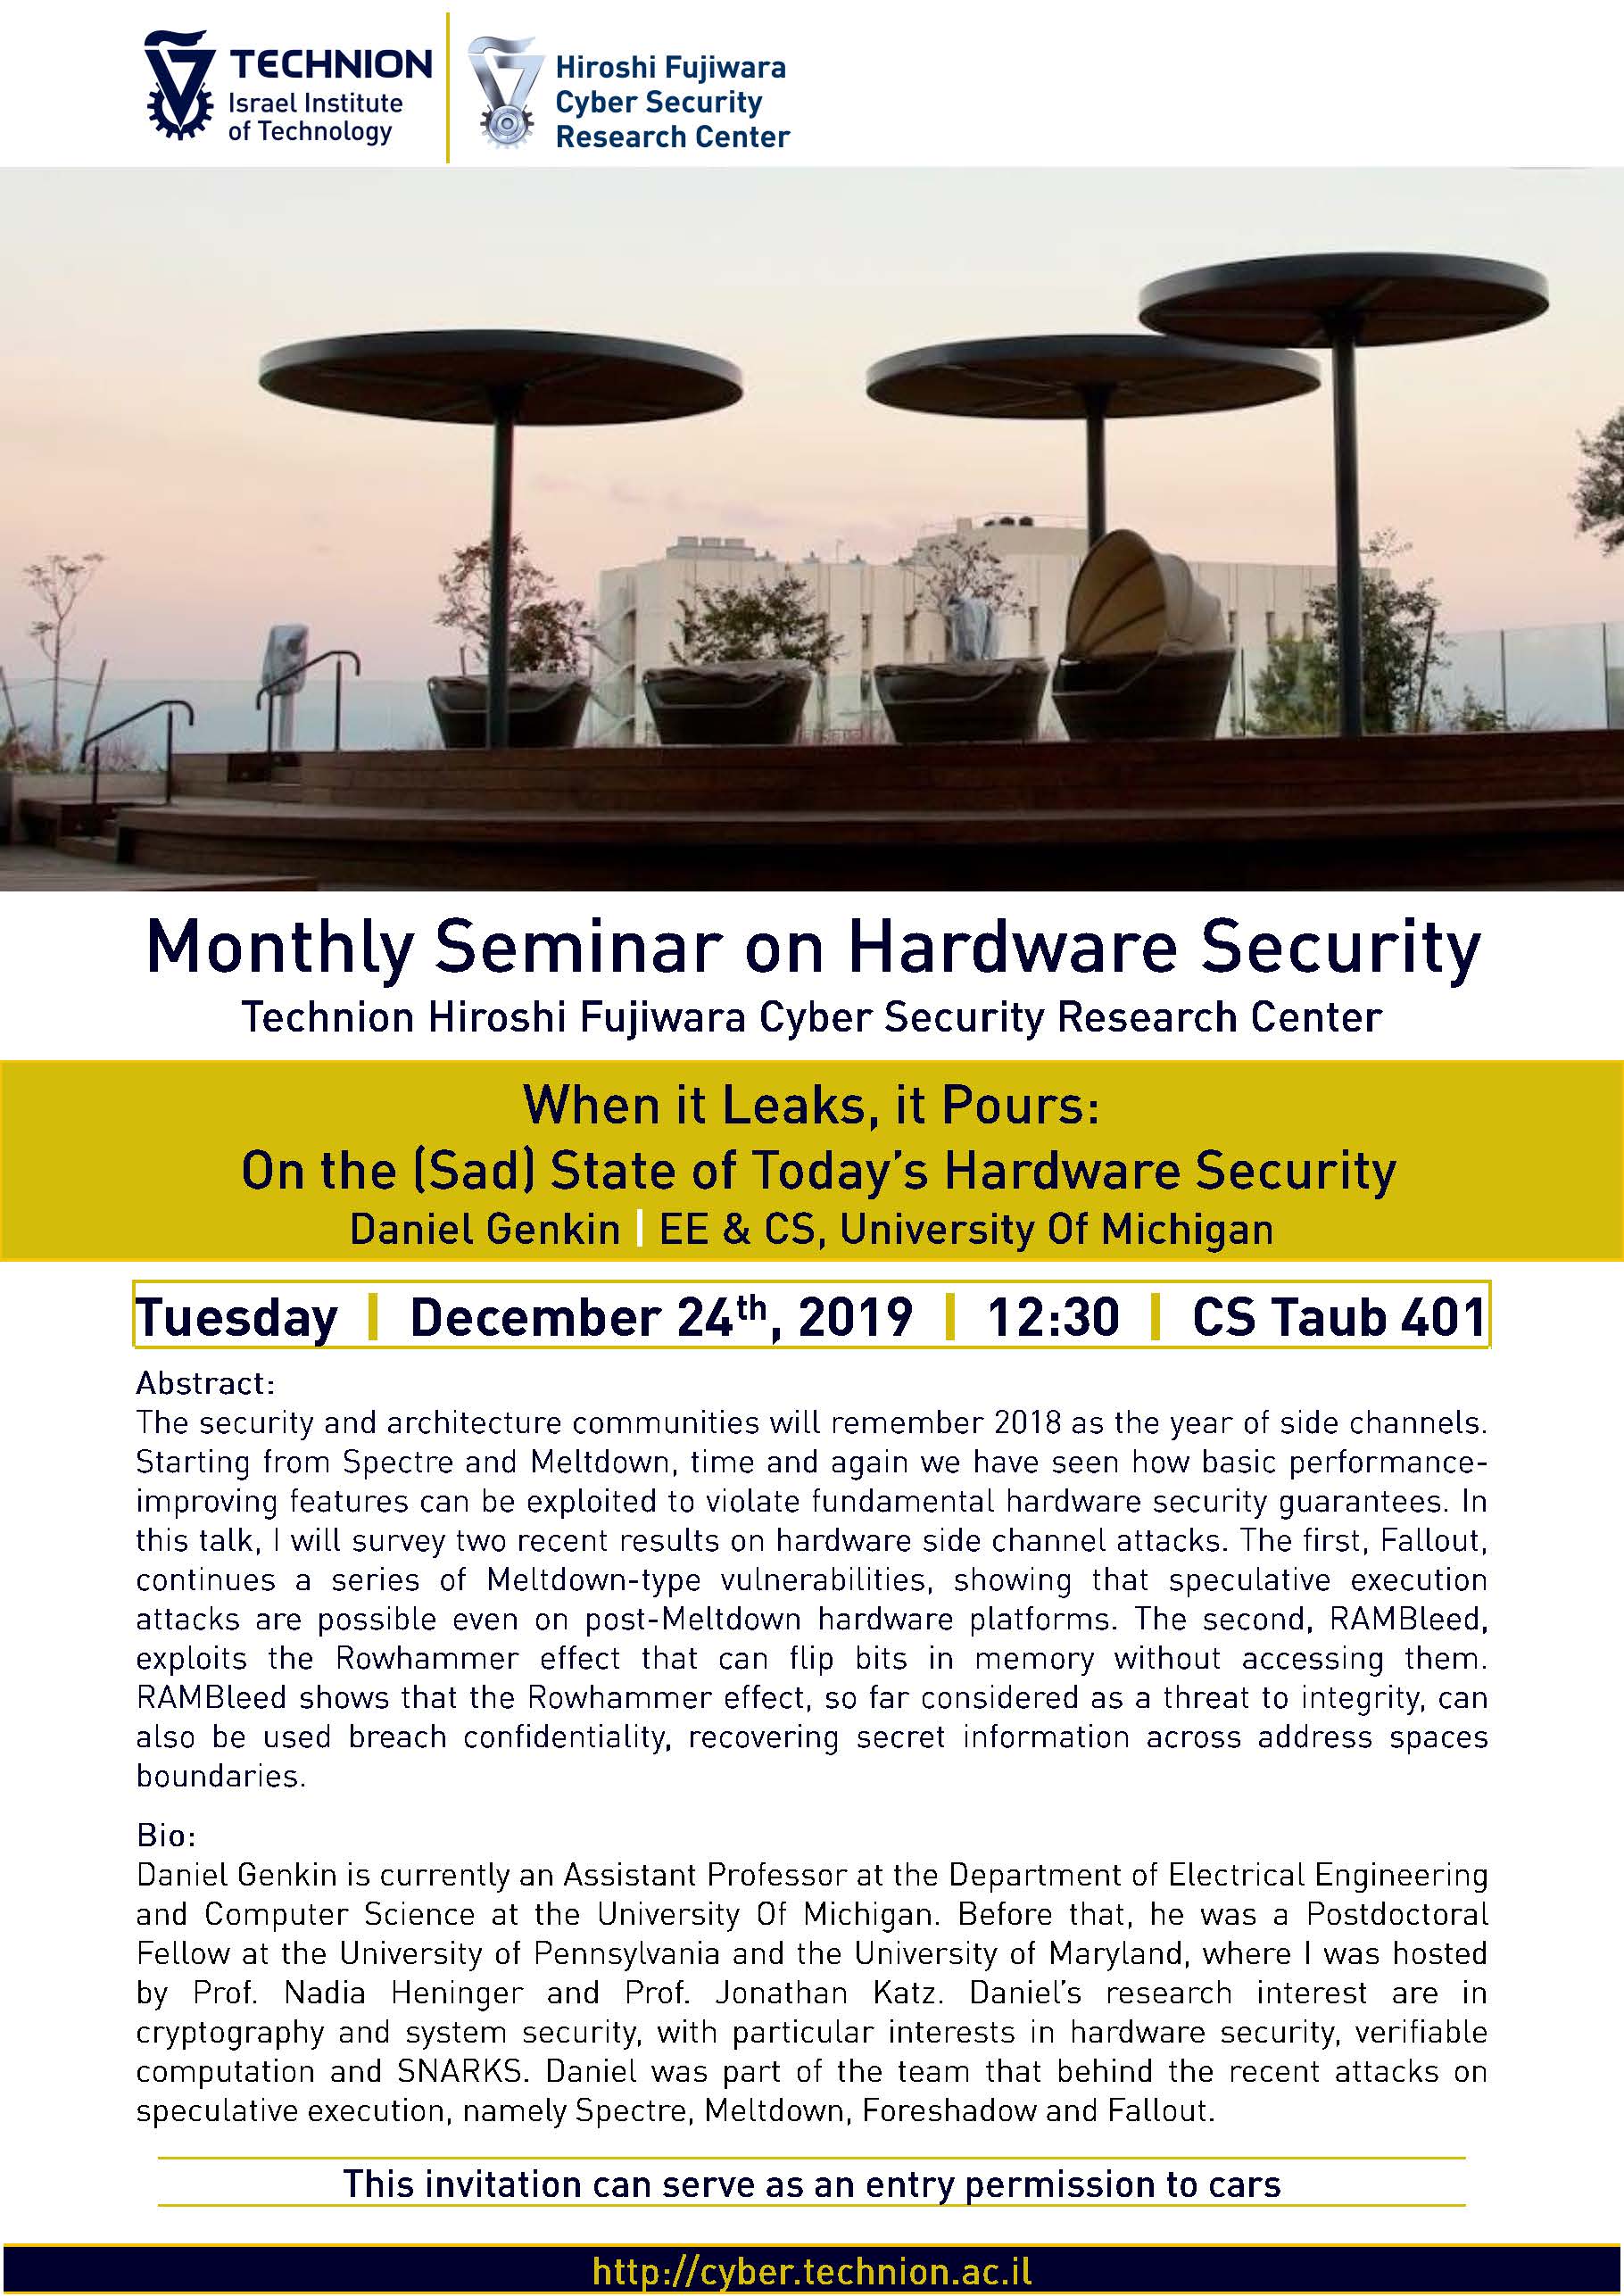 Hardware Security Seminar: When it leaks, it Pours: On the (Sad) State of Today’s Hardware Security